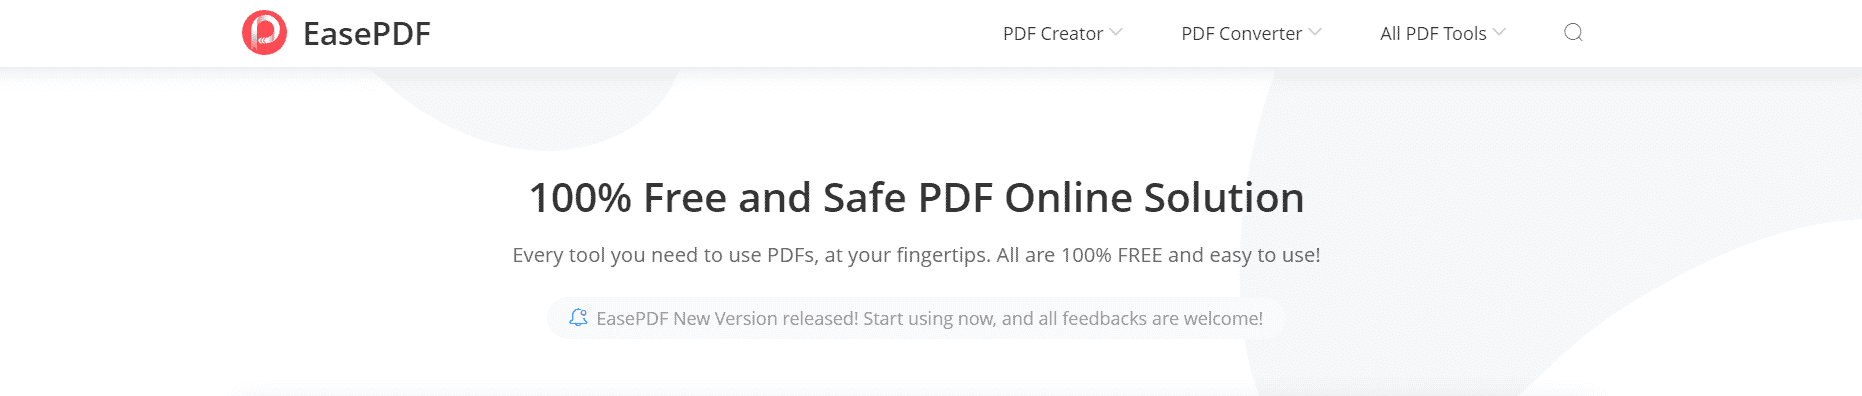 EasePDF PDF Tool Article Image 1